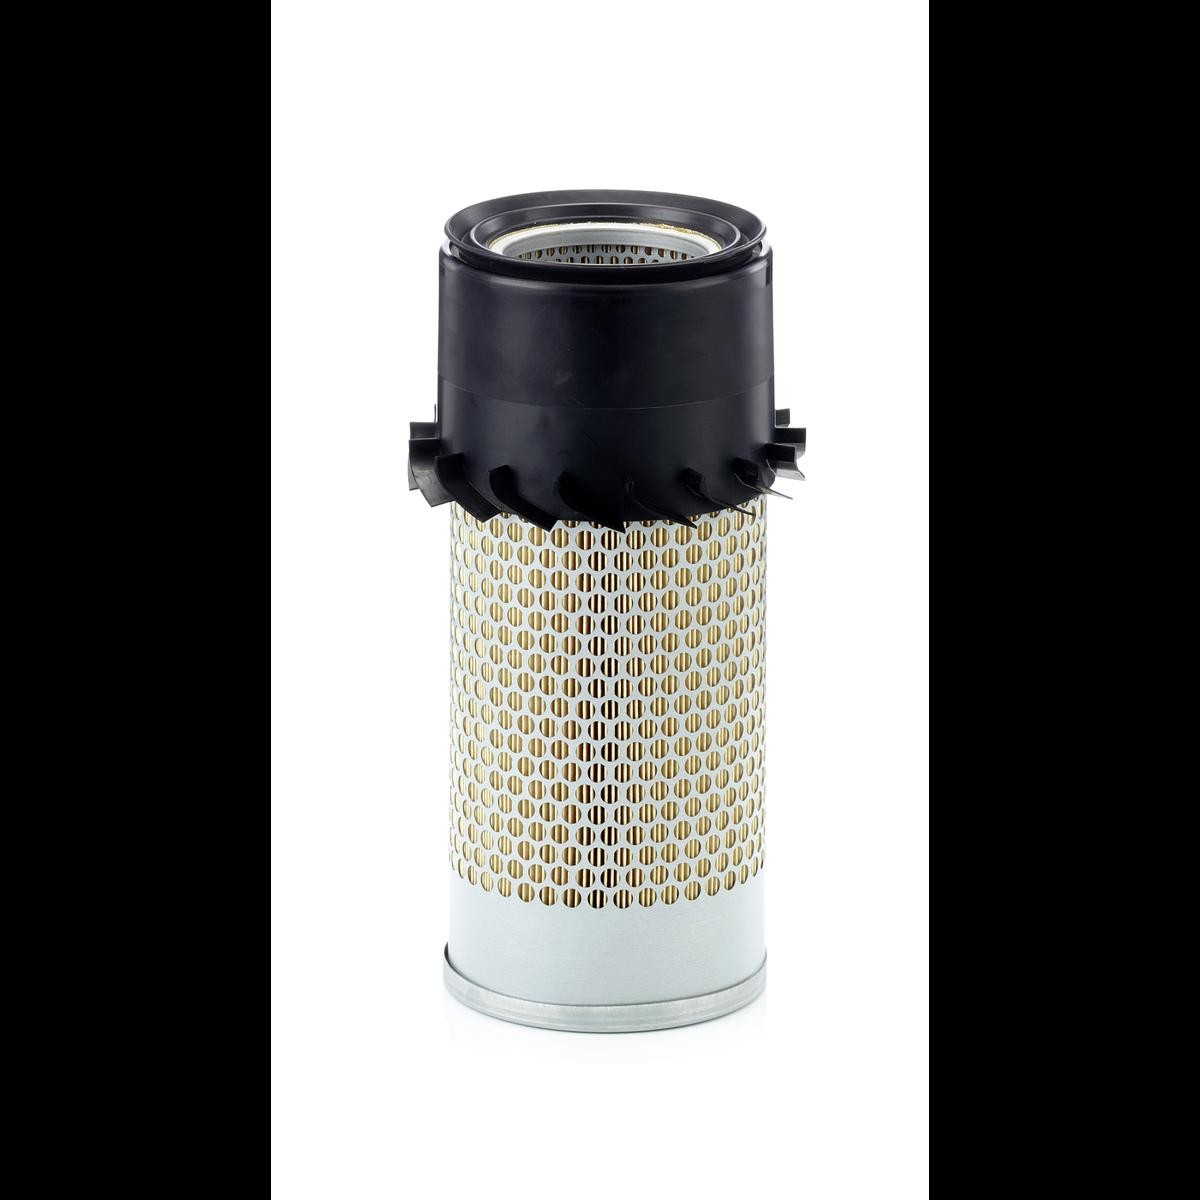 MANN-FILTER 316mm, 134mm, Filter Insert Height: 316mm Engine air filter C 14 179/1 buy